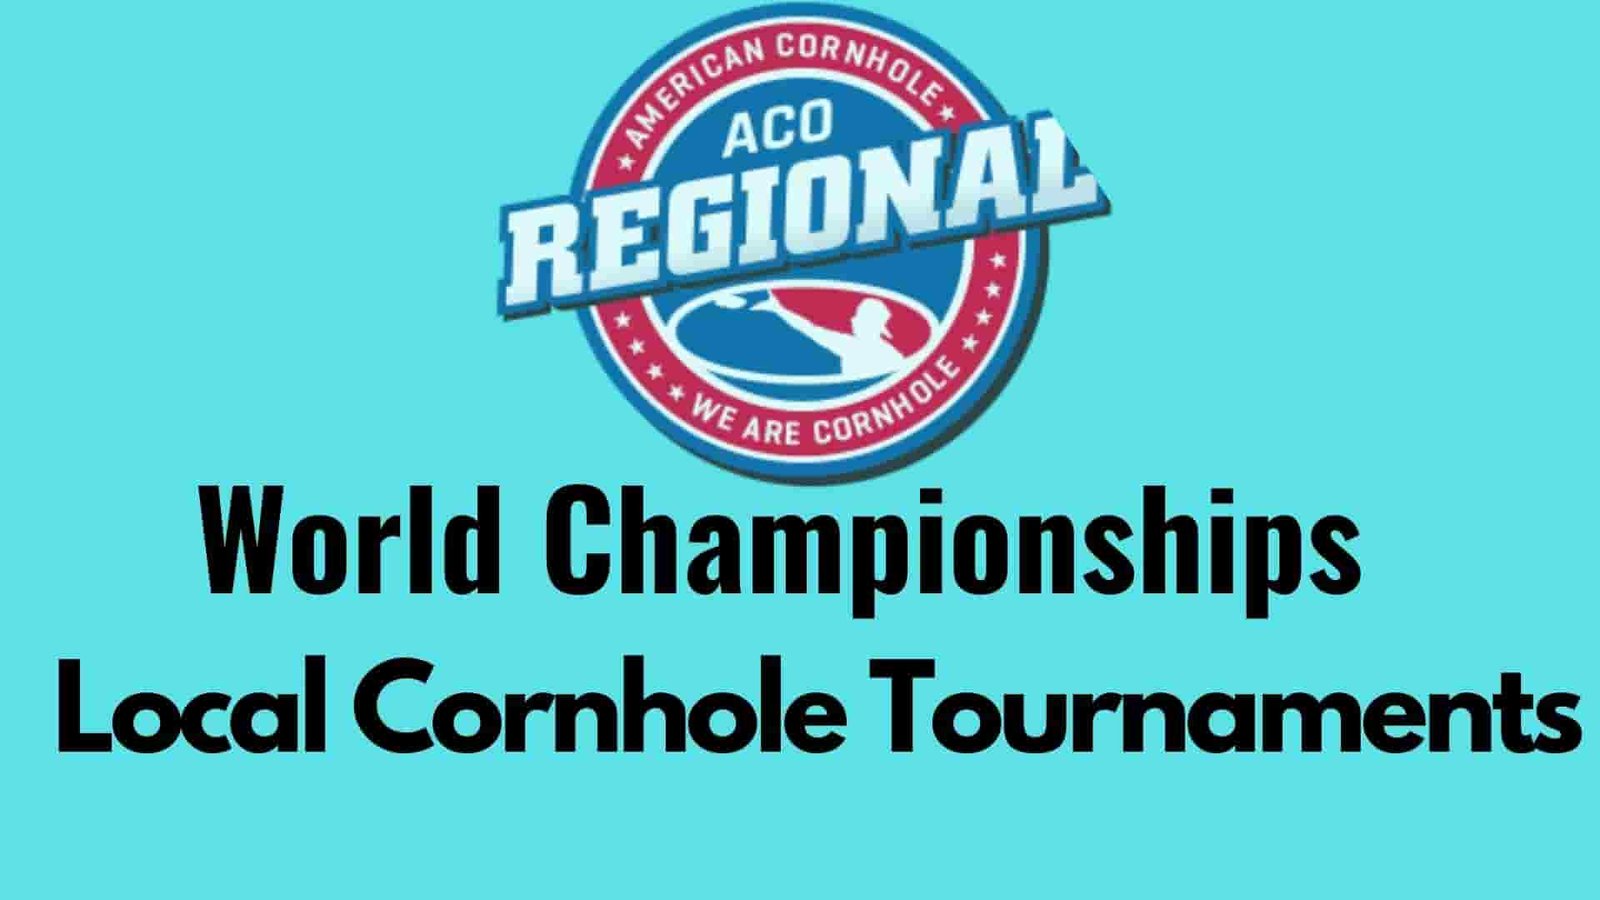 Local Cornhole Tournaments for World Championships